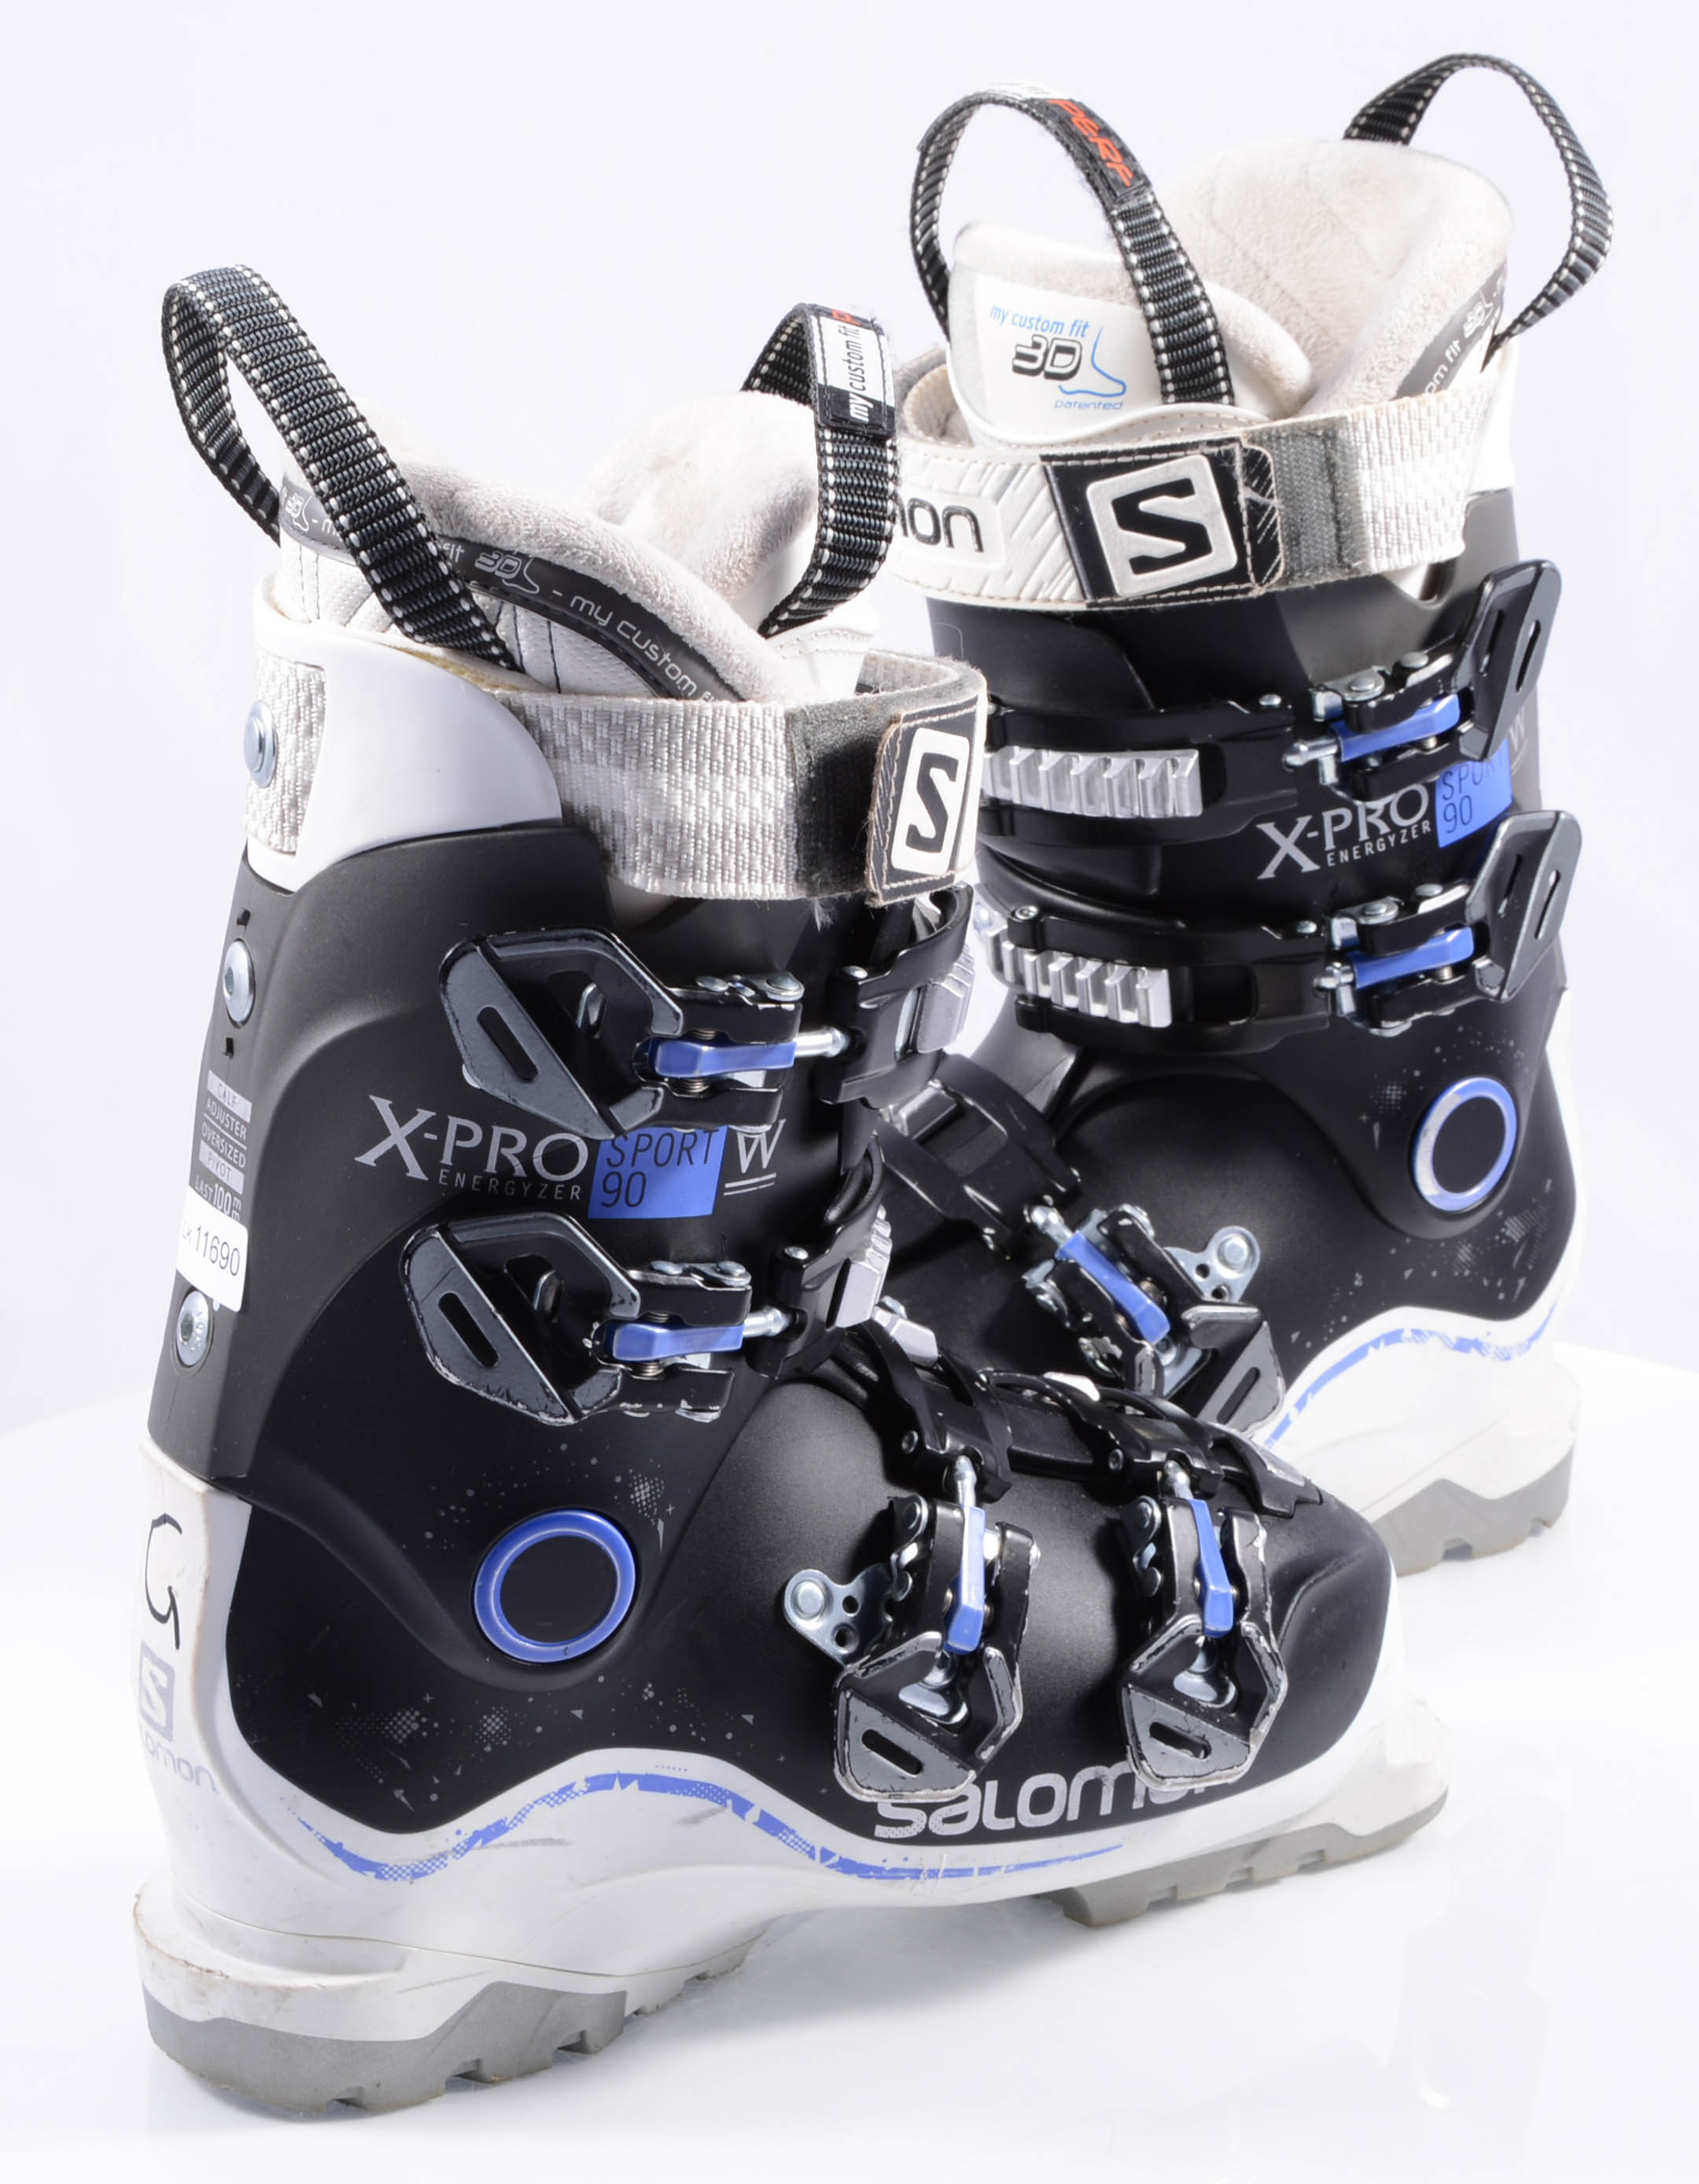 women's ski boots X-PRO W, calf adjuster, oversized pivot, black/white/purple - Mardosport.com